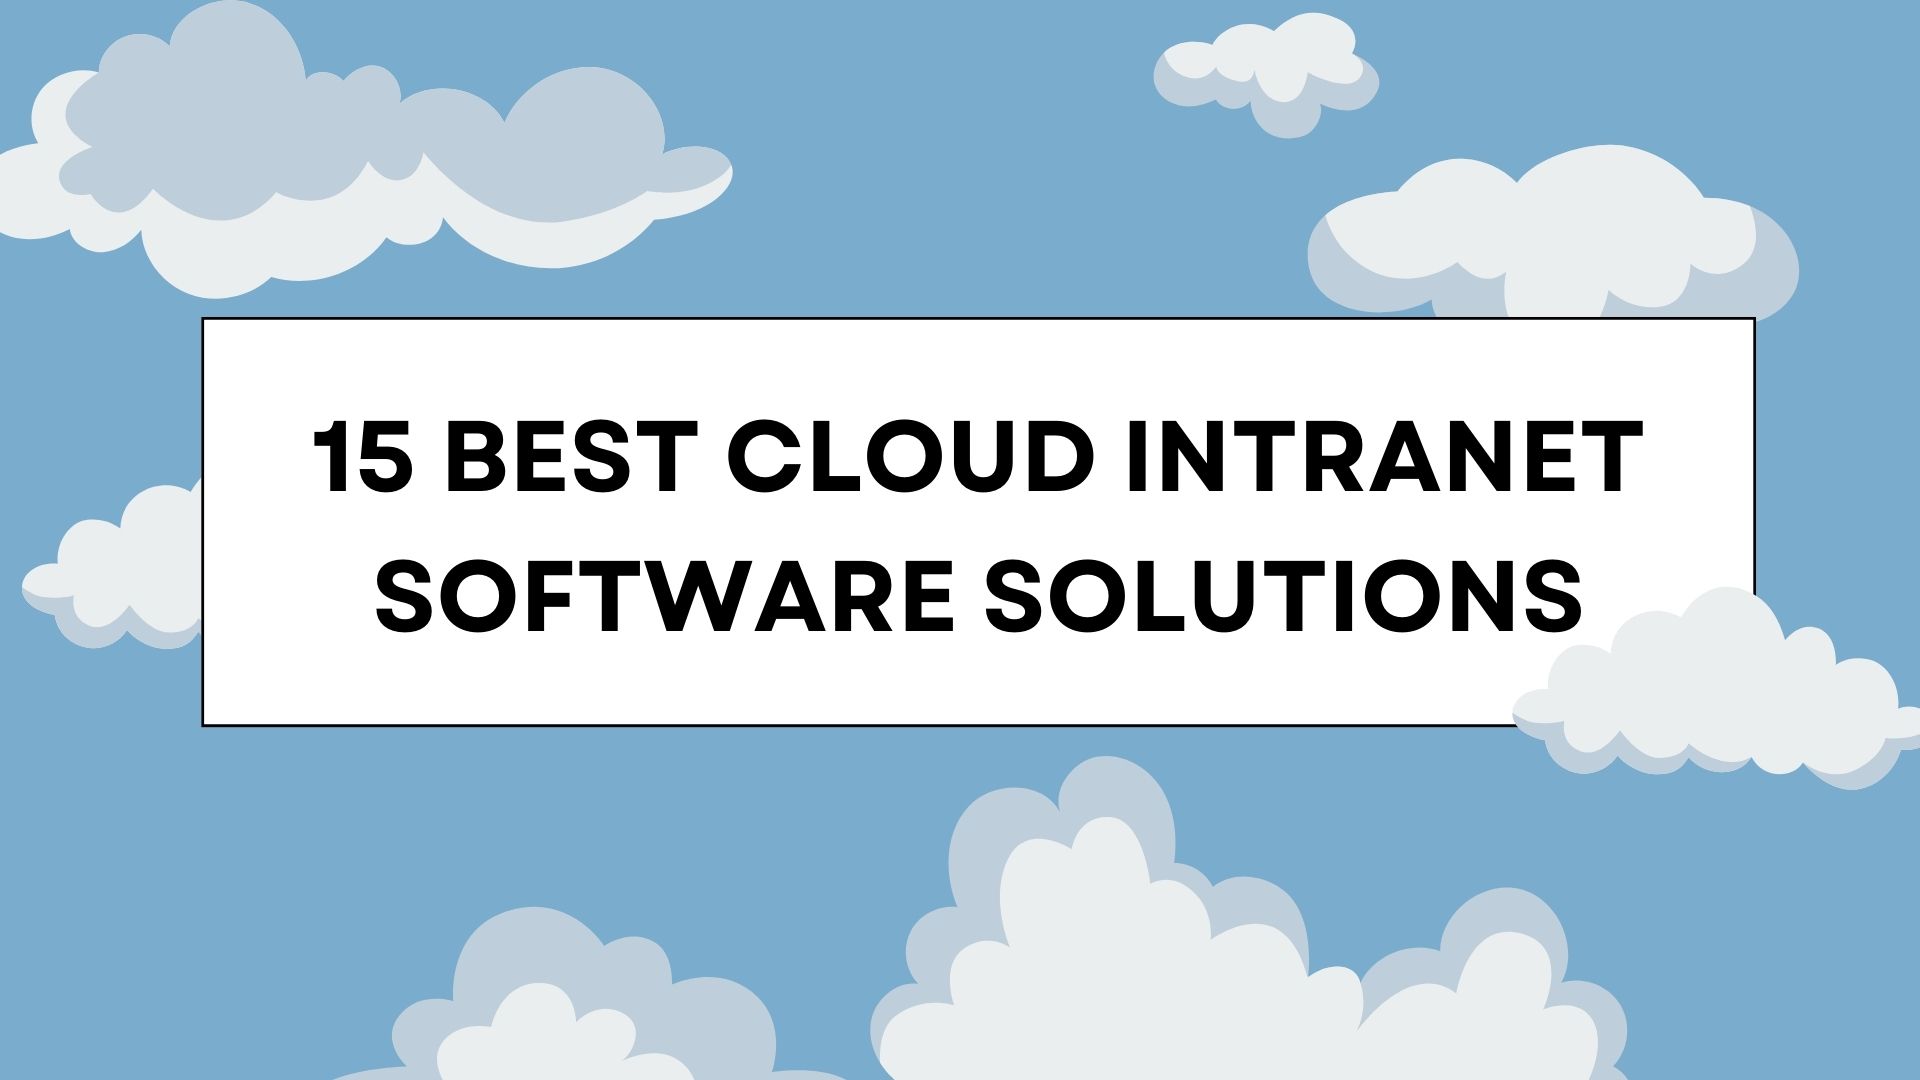 15 Best Cloud Intranet Software Solutions